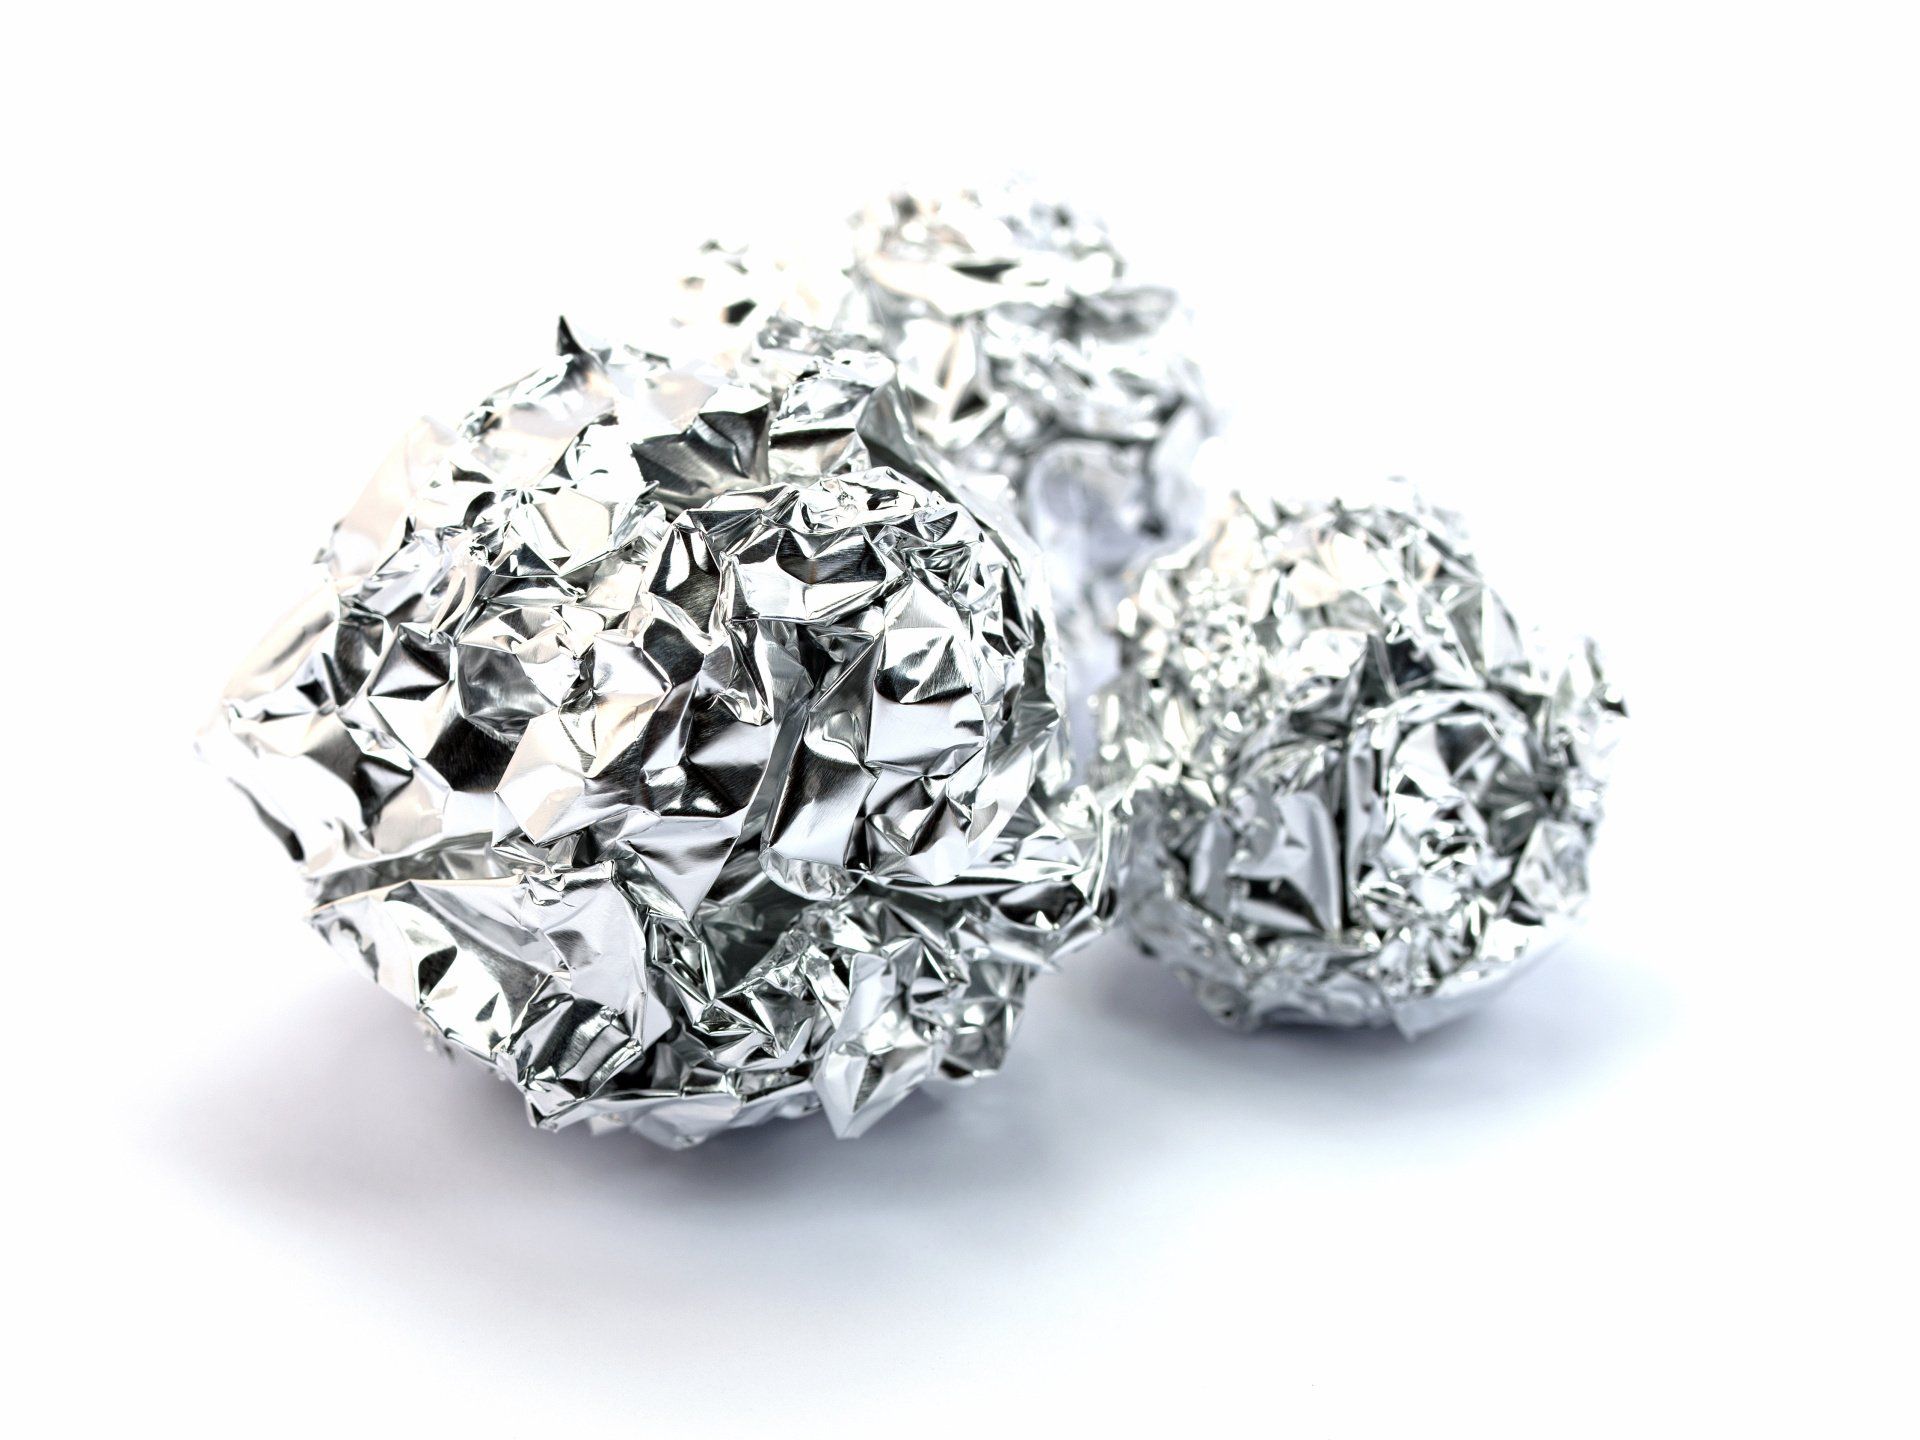 aluminium foil balls